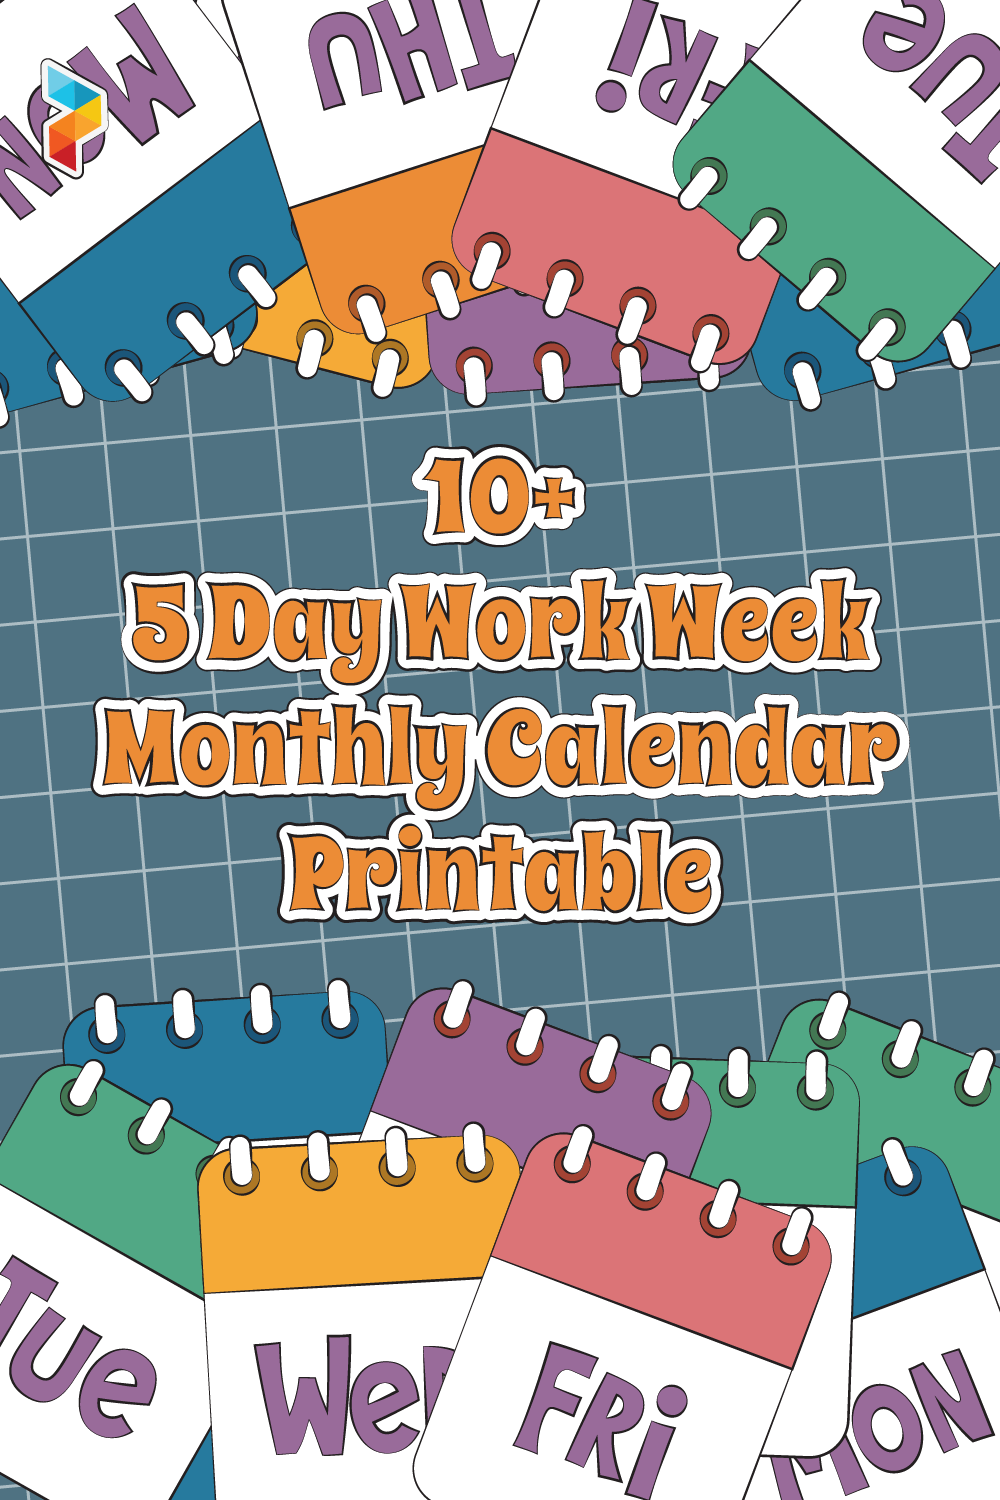 5 Day Work Week Monthly Calendar